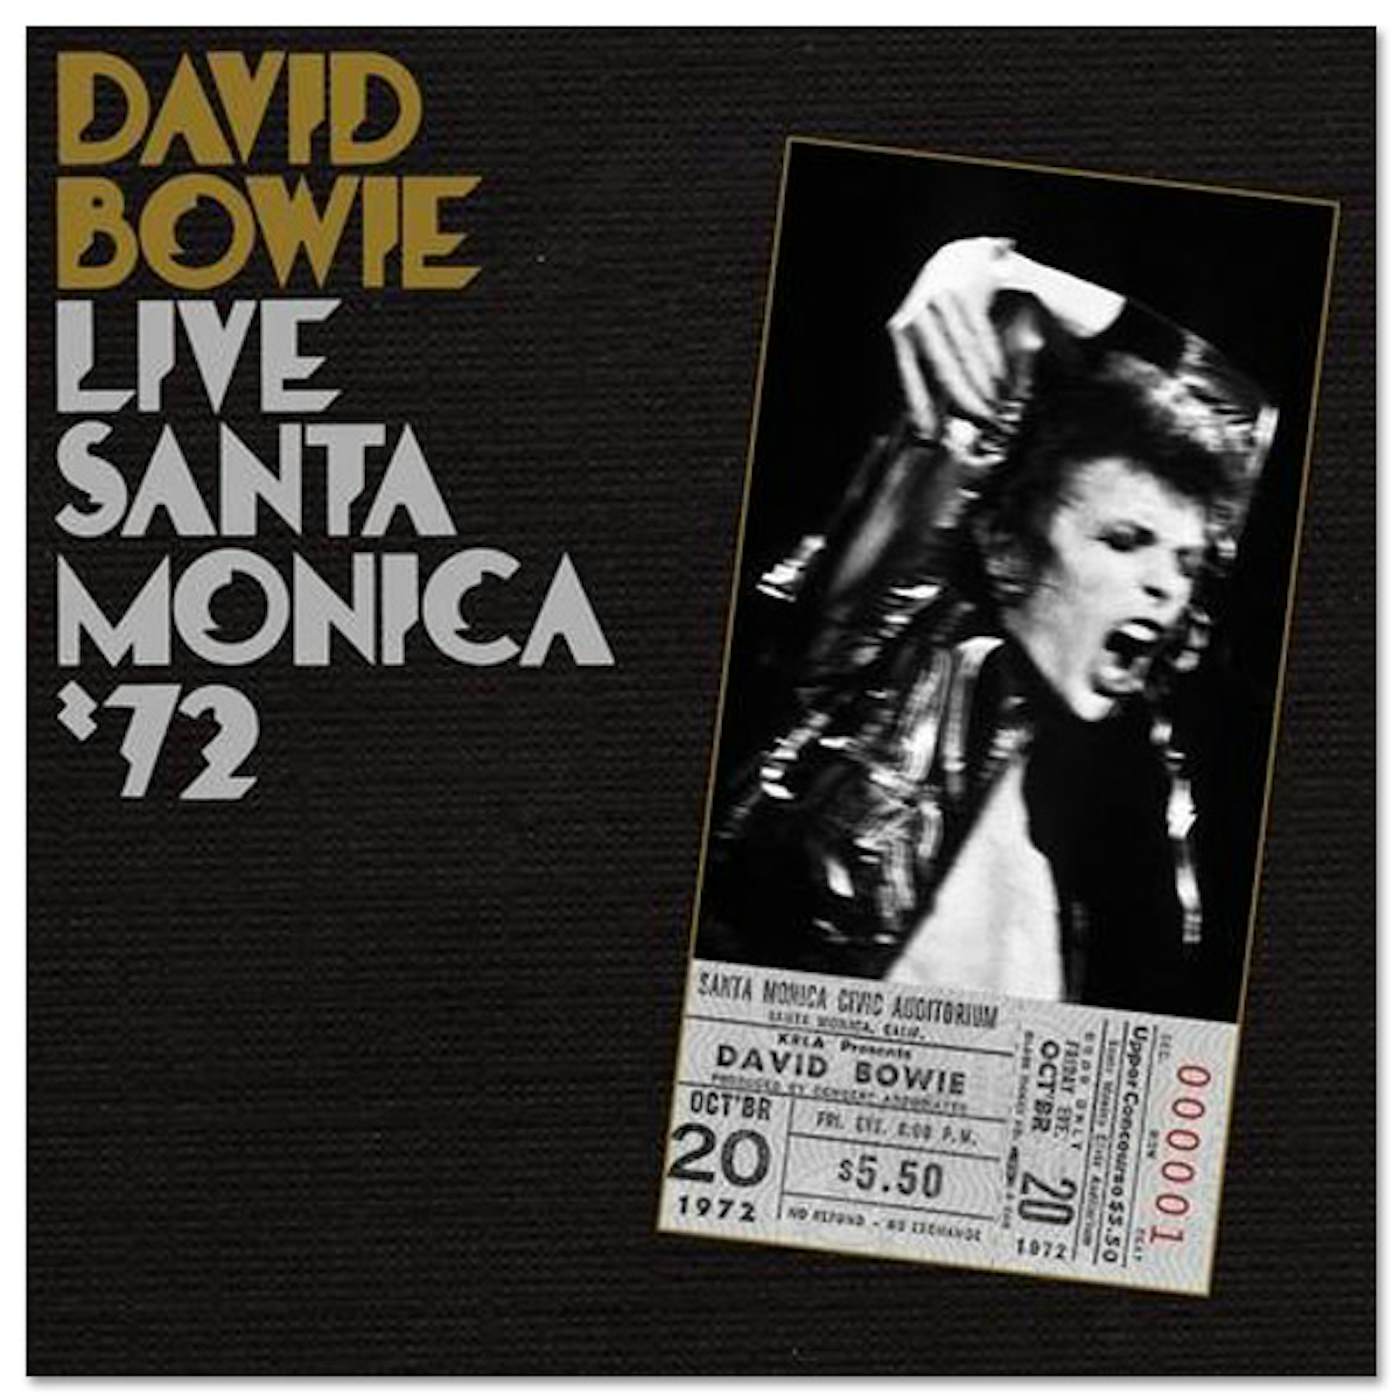 David Bowie Live In Santa Monica '72 CD